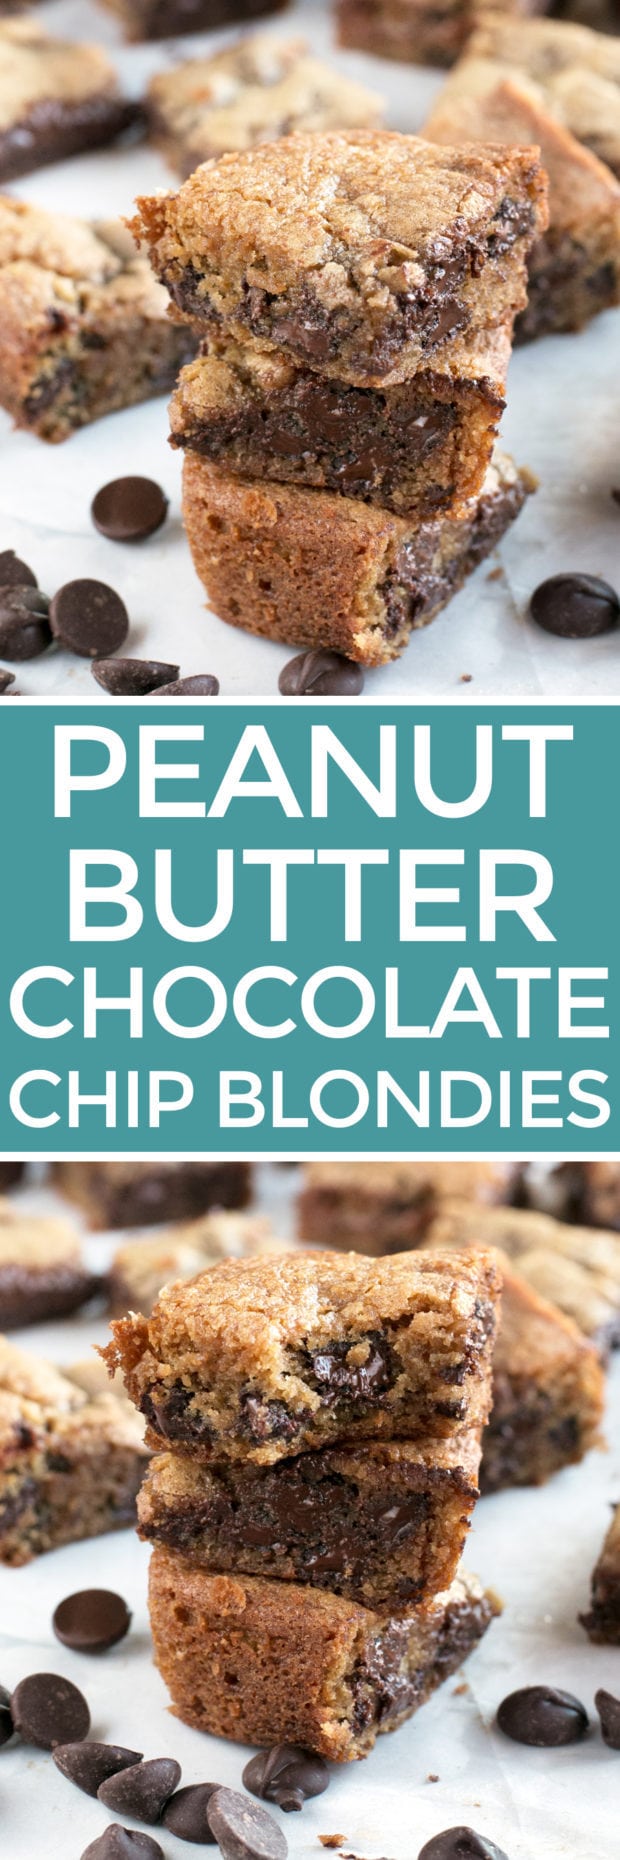 Peanut Butter Chocolate Chip Blondies